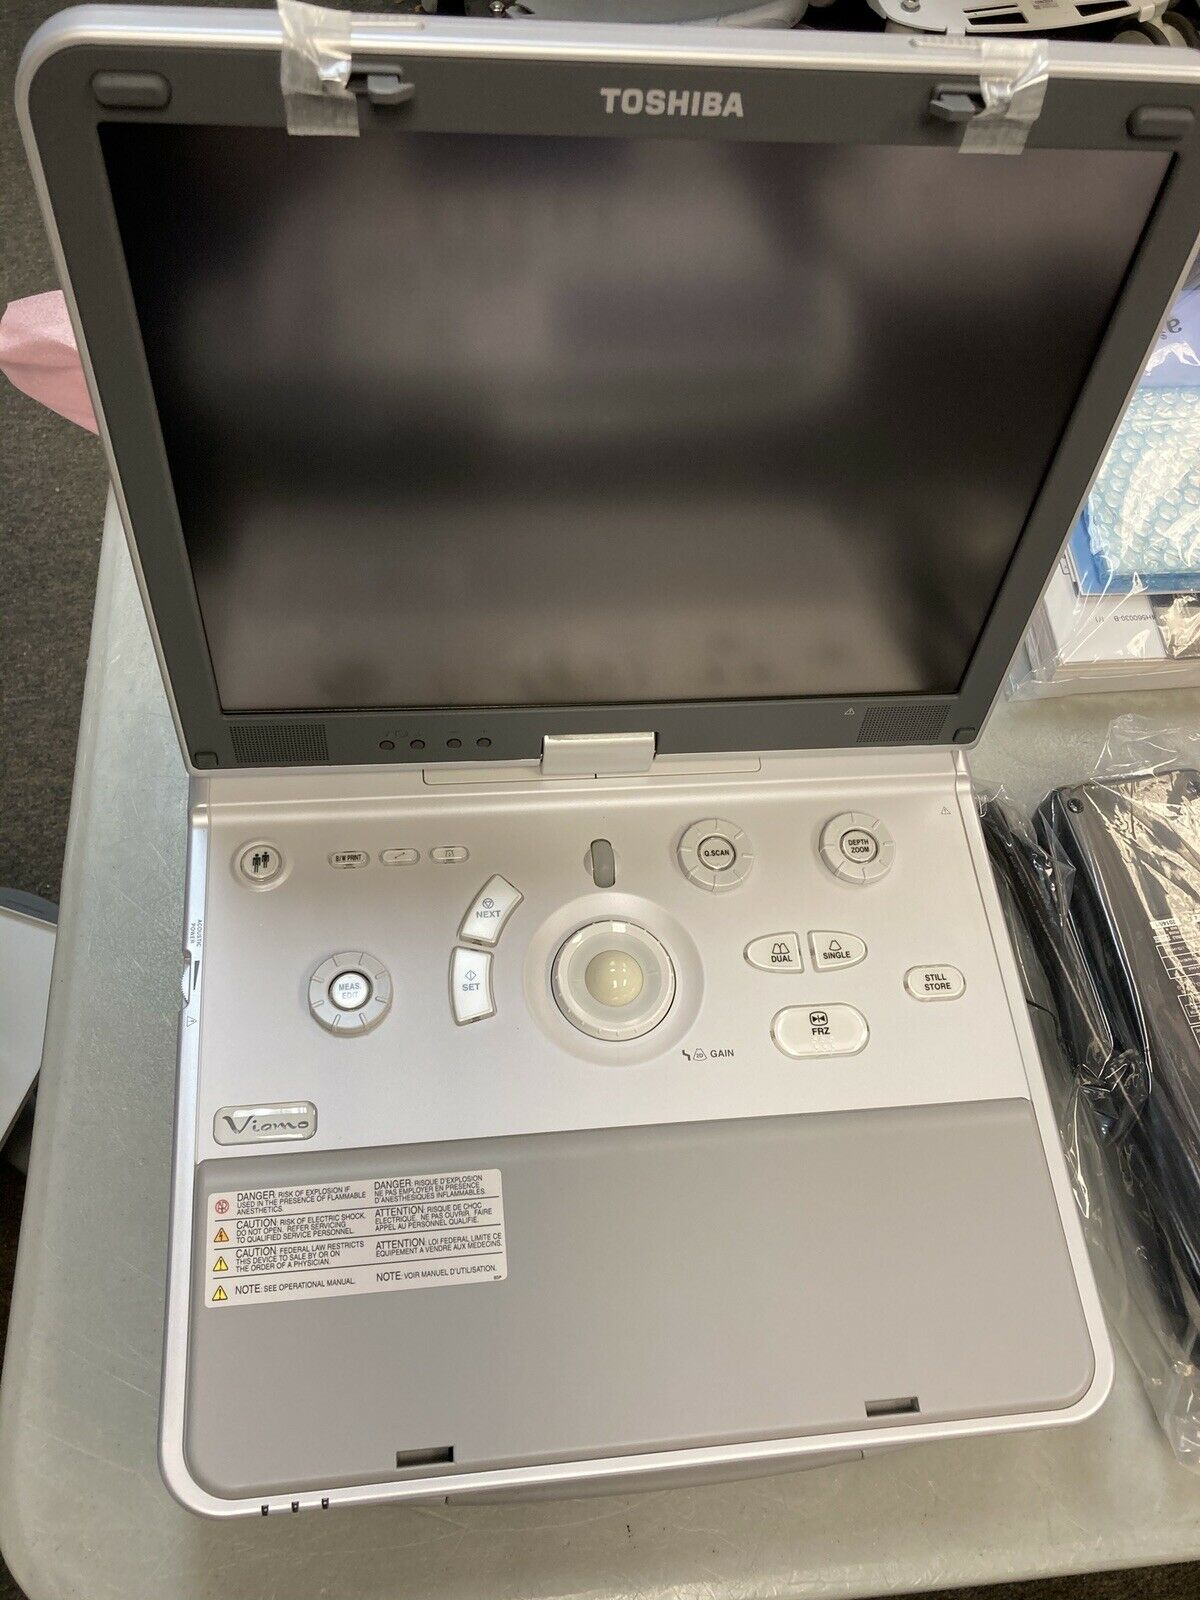 Toshiba Viamo Ultrasound System Model SSA-640A DIAGNOSTIC ULTRASOUND MACHINES FOR SALE